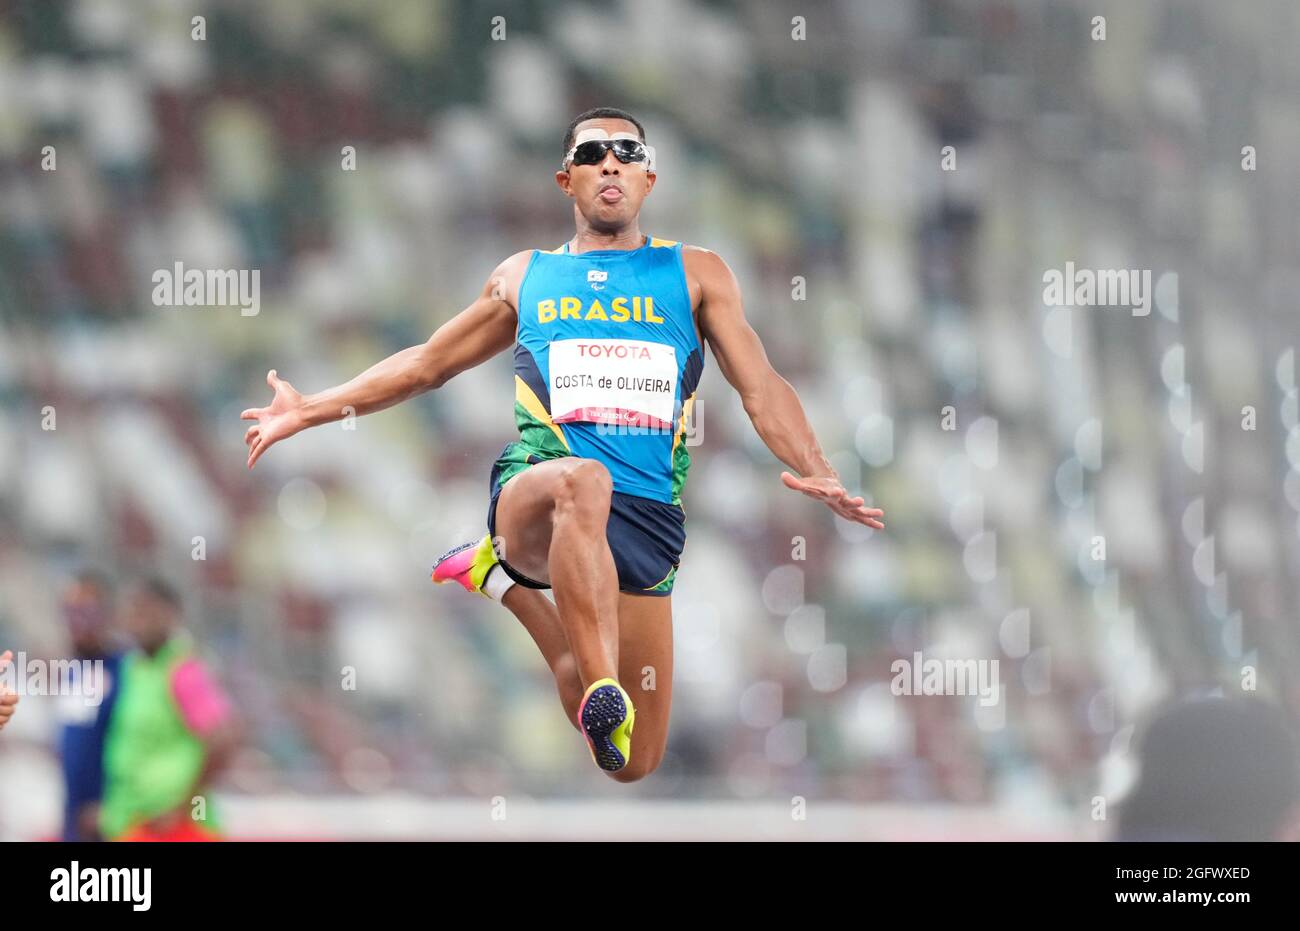 August 27, 2021: Ricardo Costa de Oliveira from Brazil at long jump during athletics at the Tokyo Paralympics, Tokyo Olympic Stadium, Tokyo, Japan. Kim Price/CSM Stock Photo